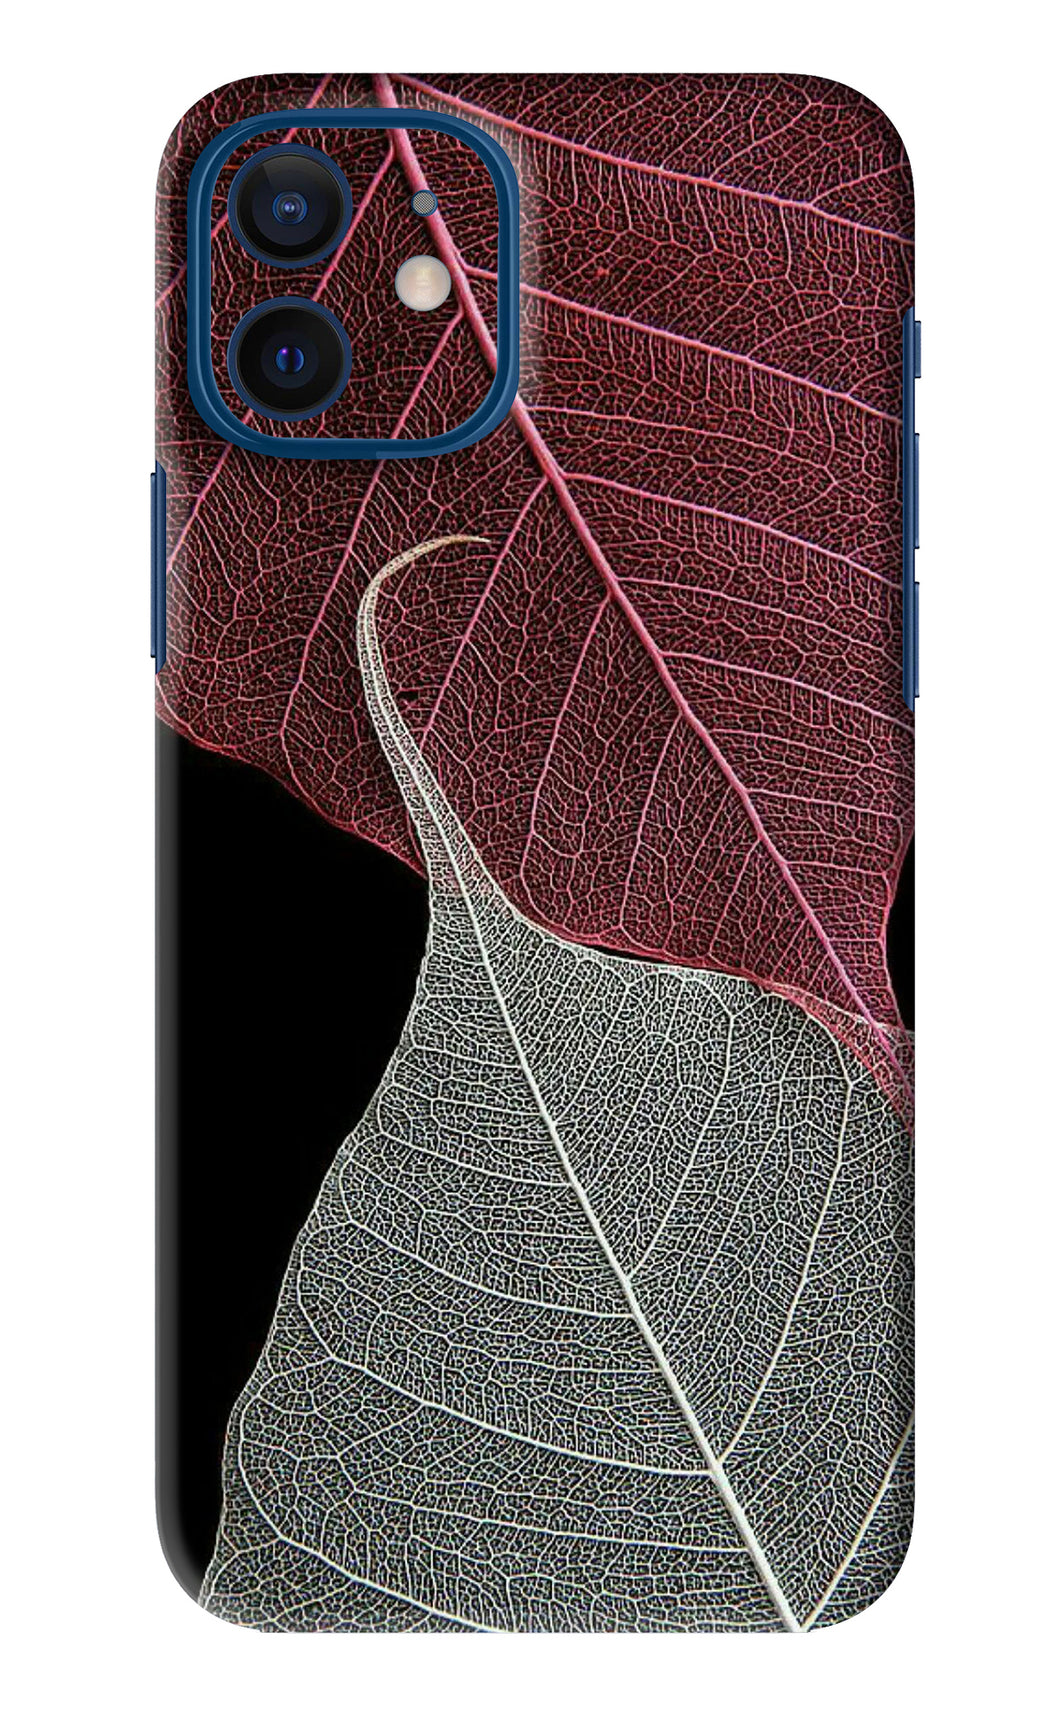 Leaf Pattern iPhone 12 Back Skin Wrap